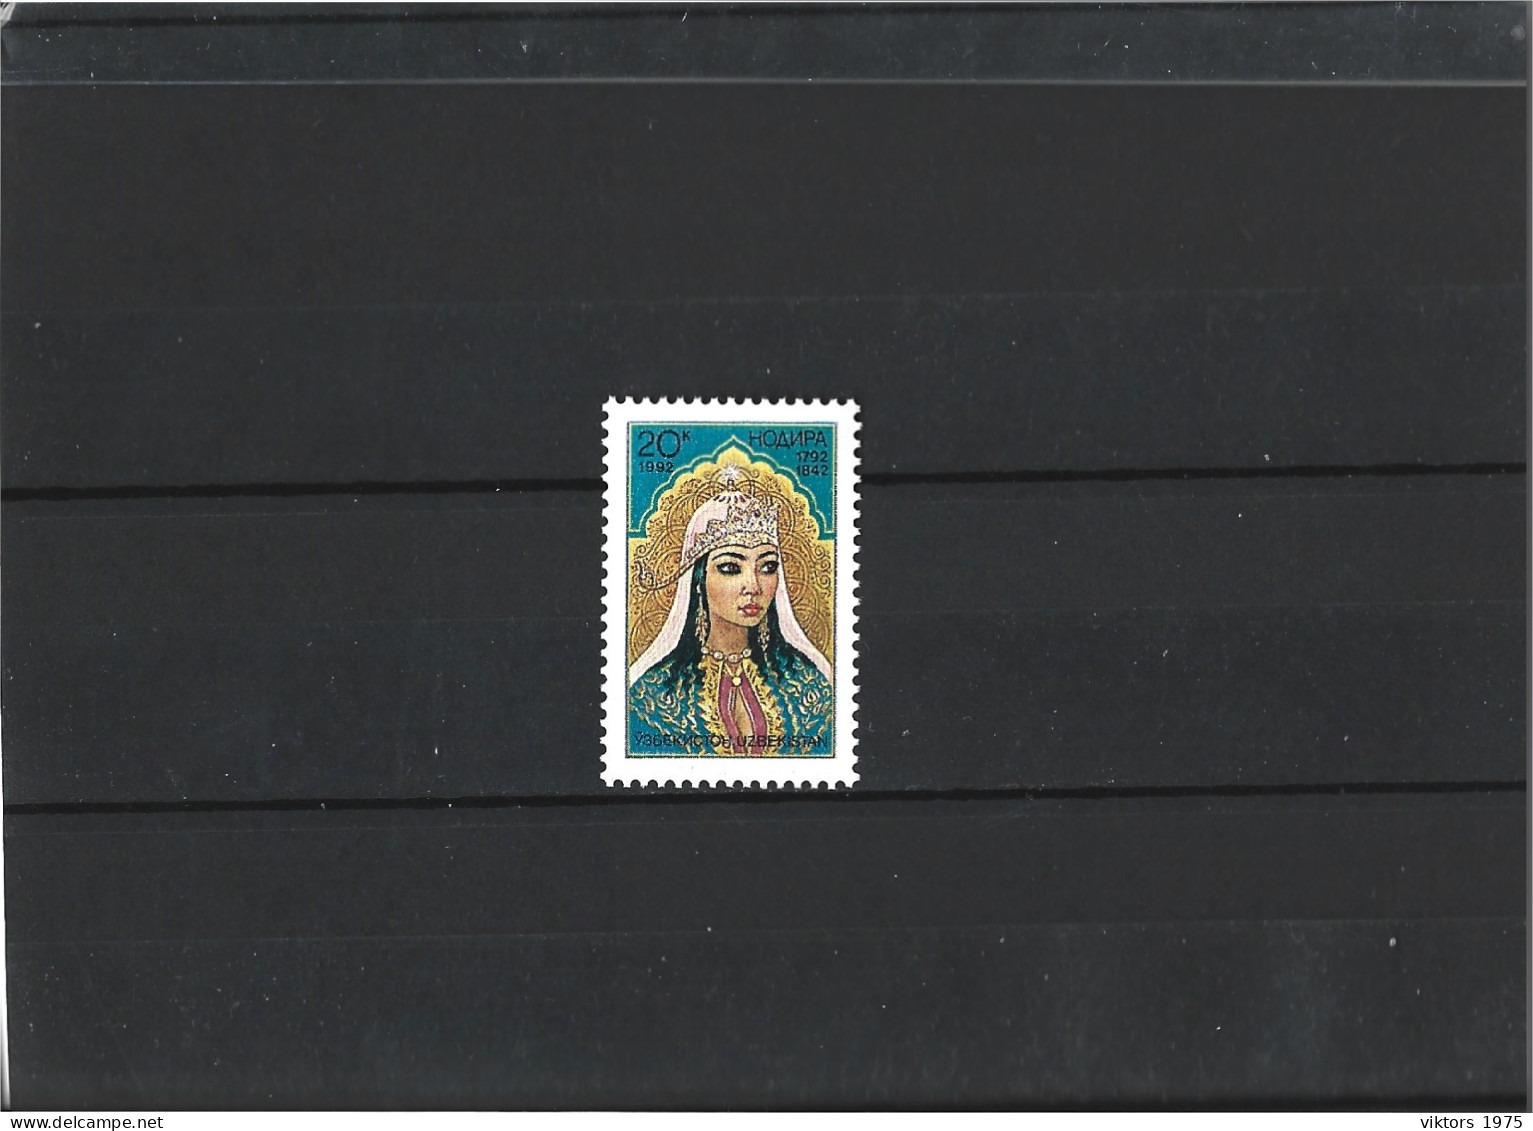 MNH Stamp Nr.1 In MICHEL Catalog - Usbekistan